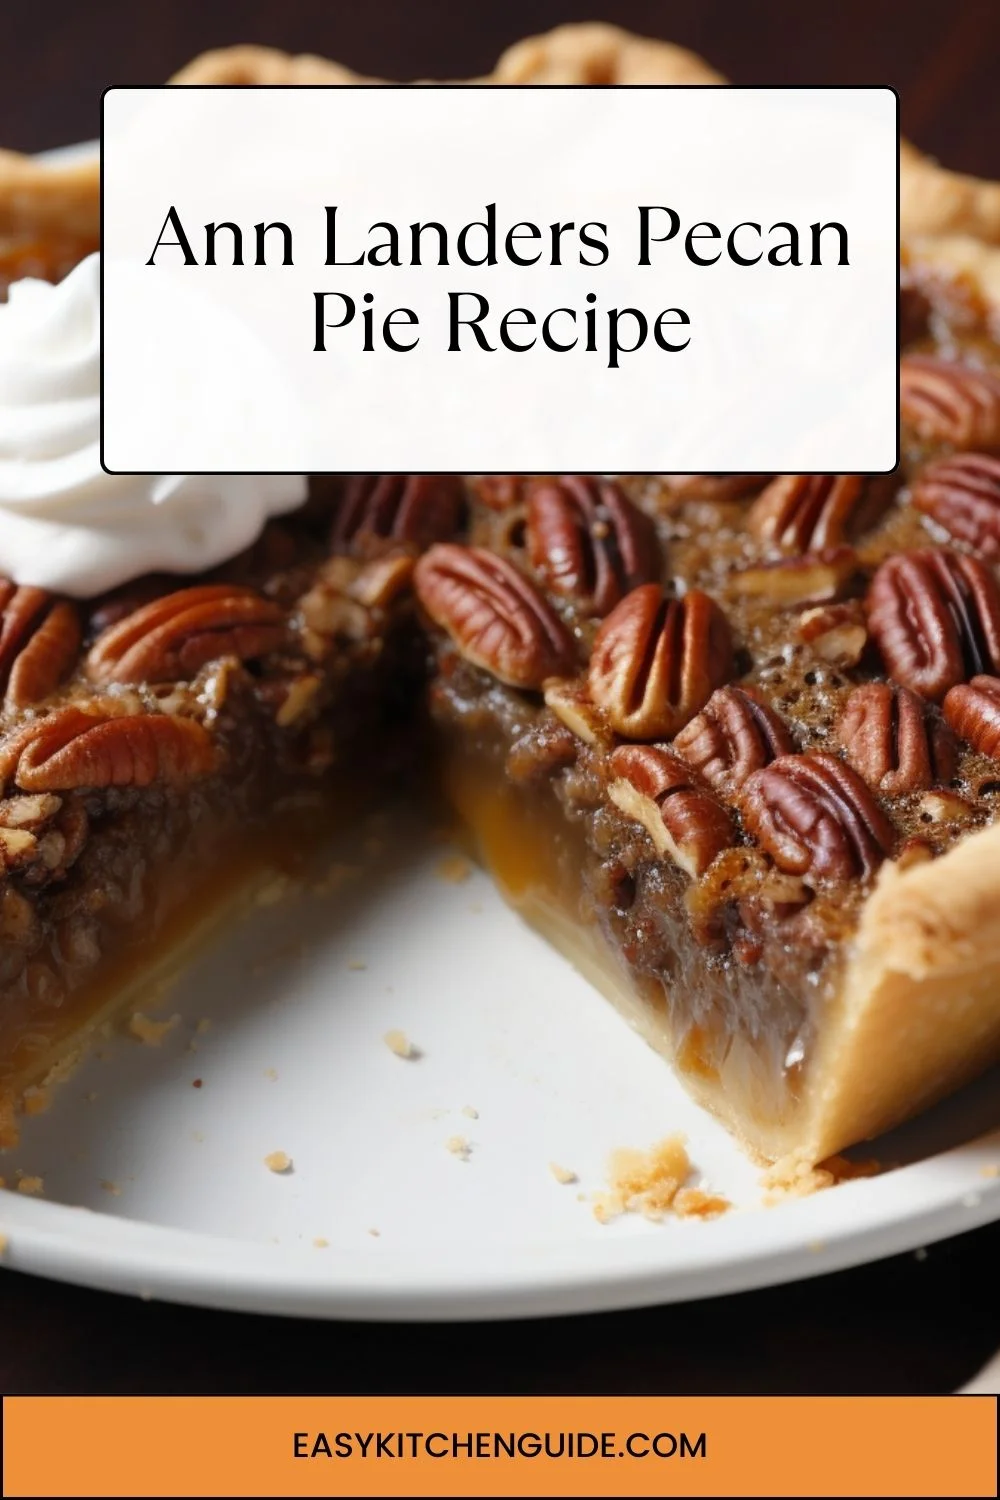 Ann Landers Pecan Pie Recipe